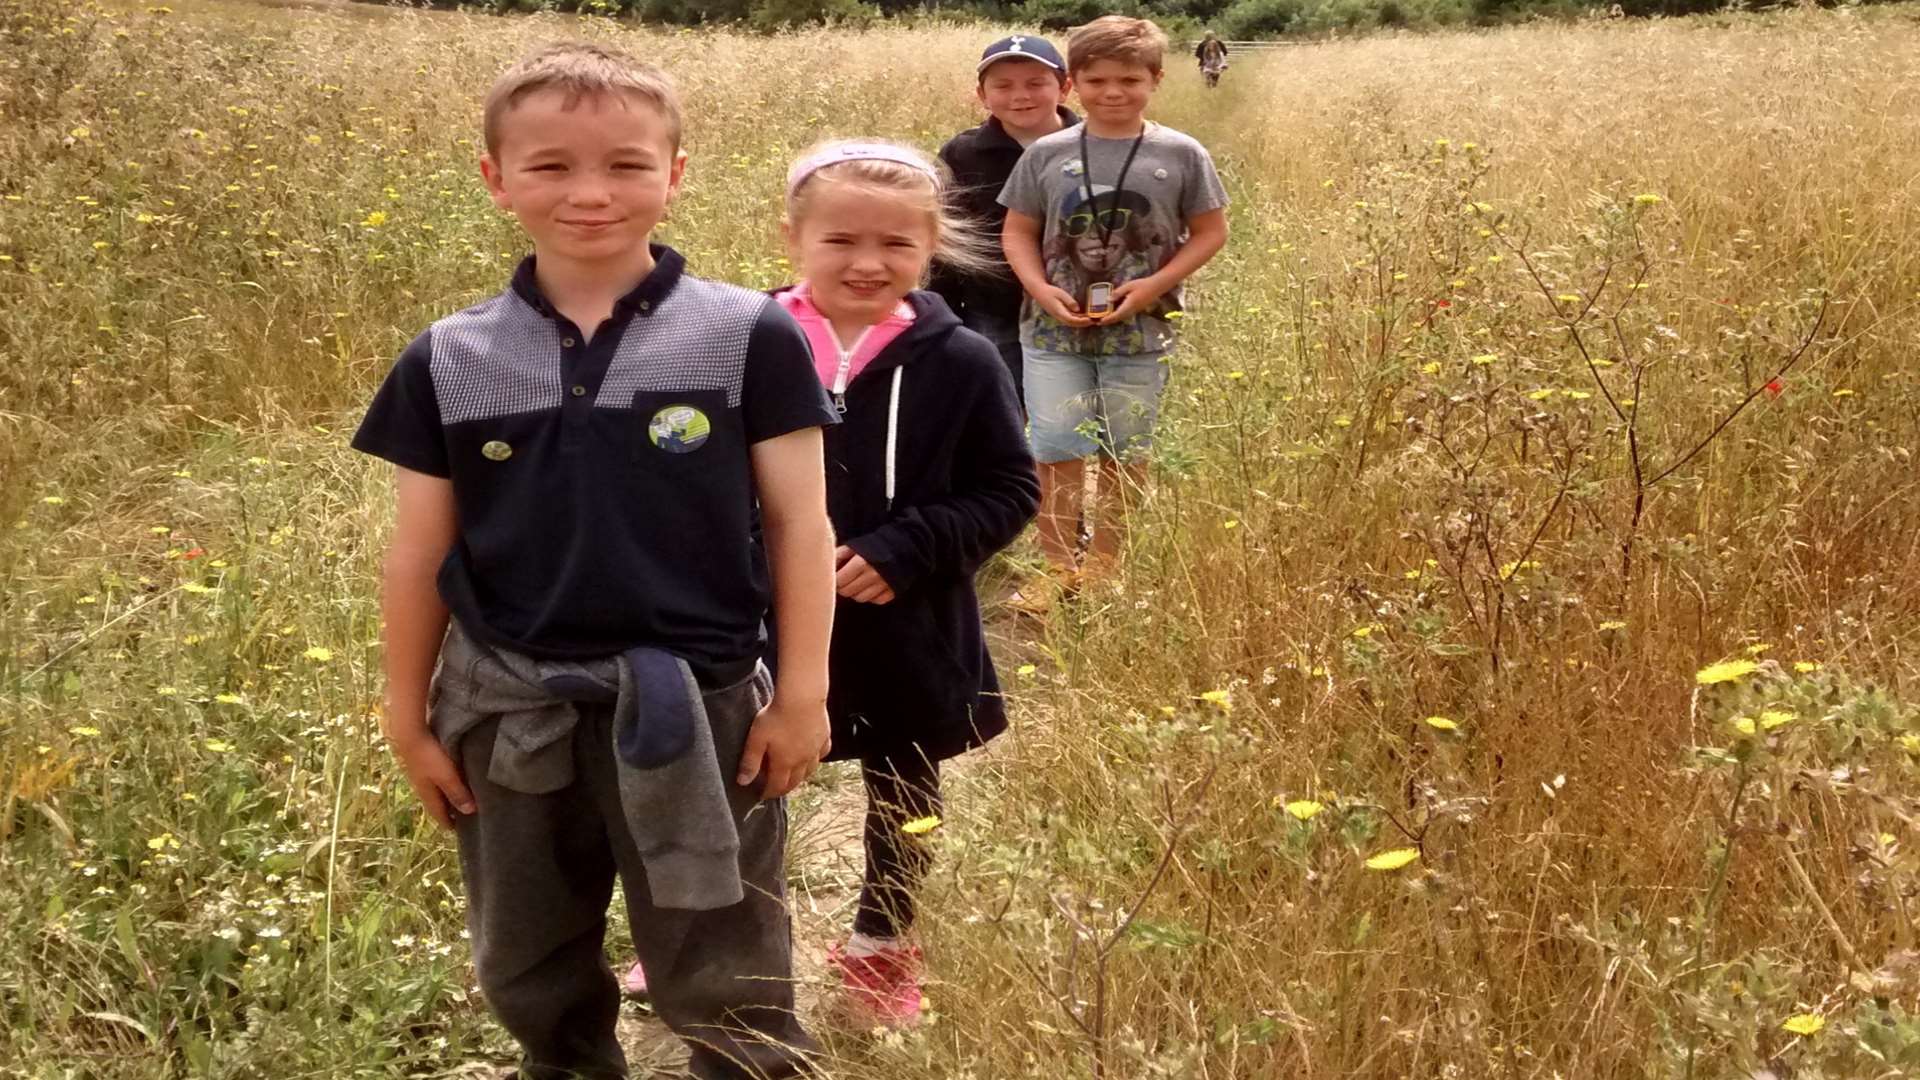 Children on the treasure hunt at Ranscombe Farm